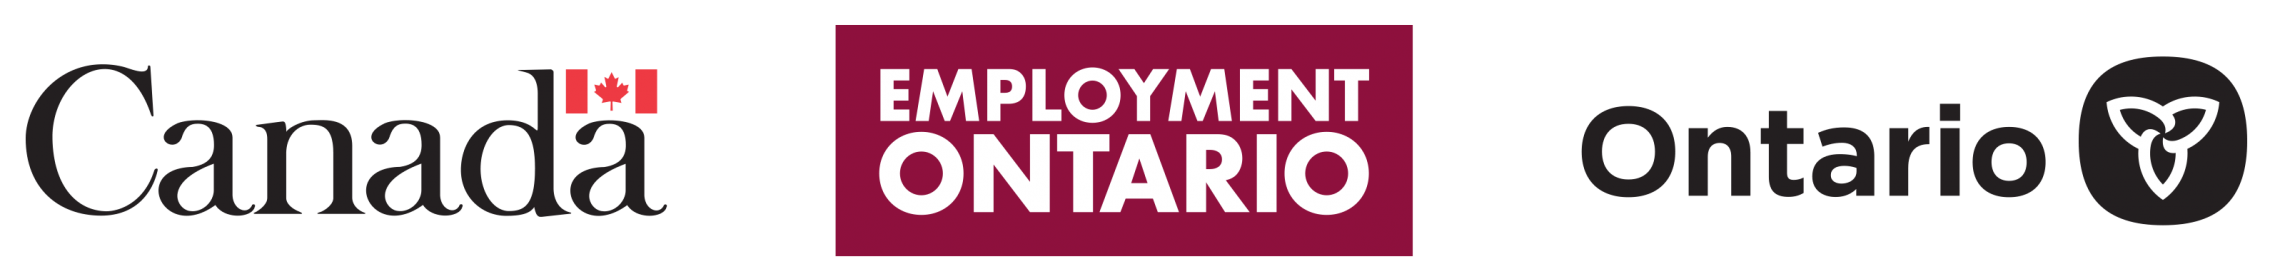 Government of Canada, Employment Ontario, Province of Ontario logo lockup